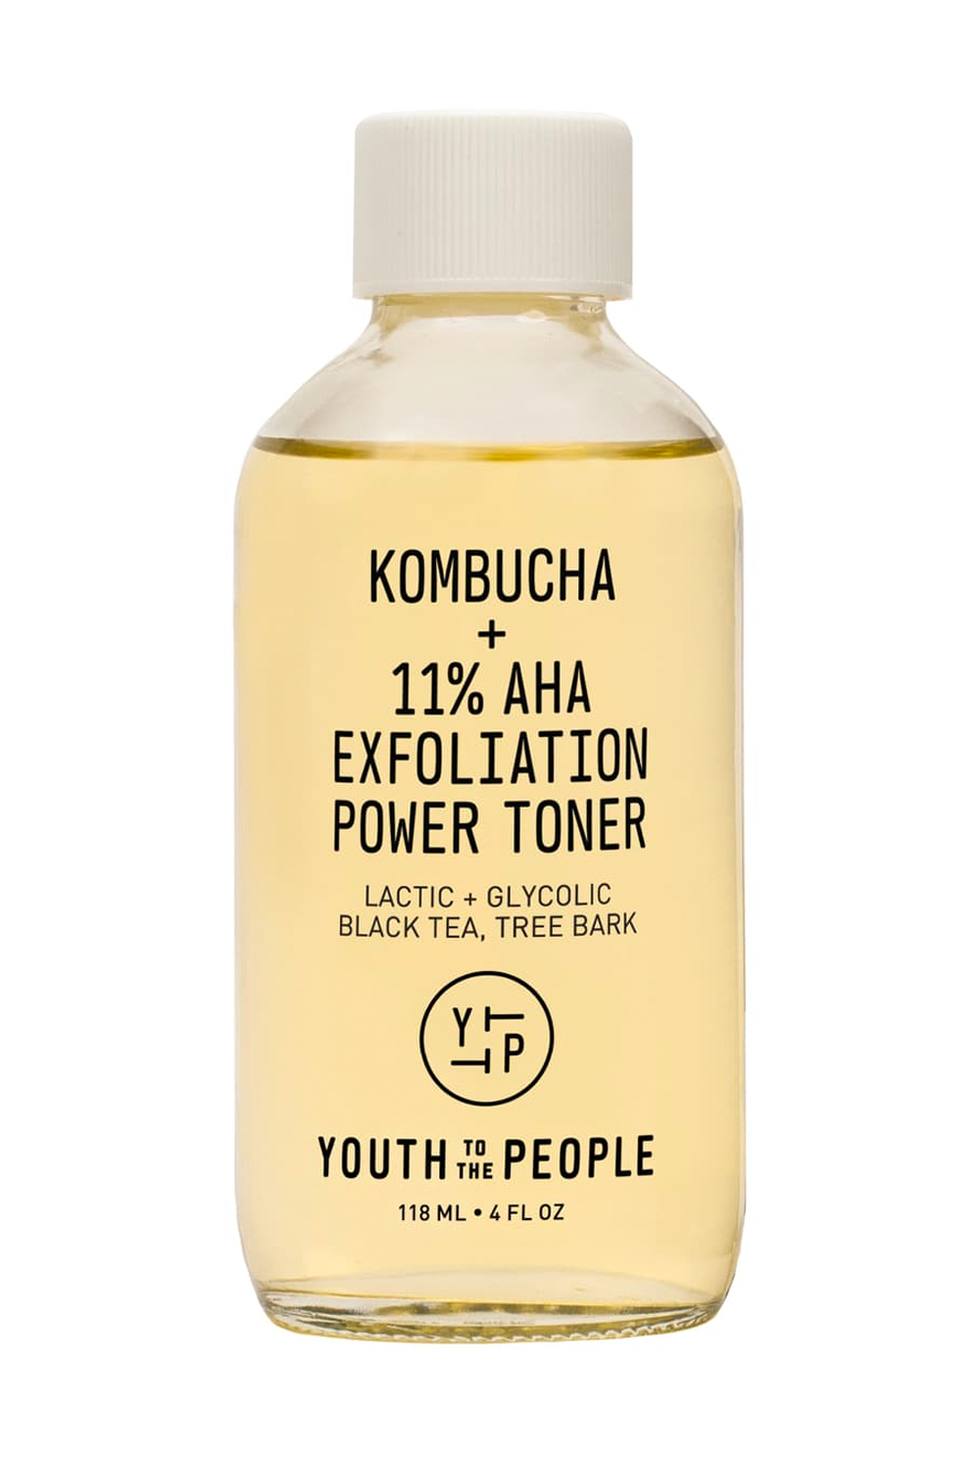 Youth to the People Kombucha + 11% AHA Exfoliation Power Toner